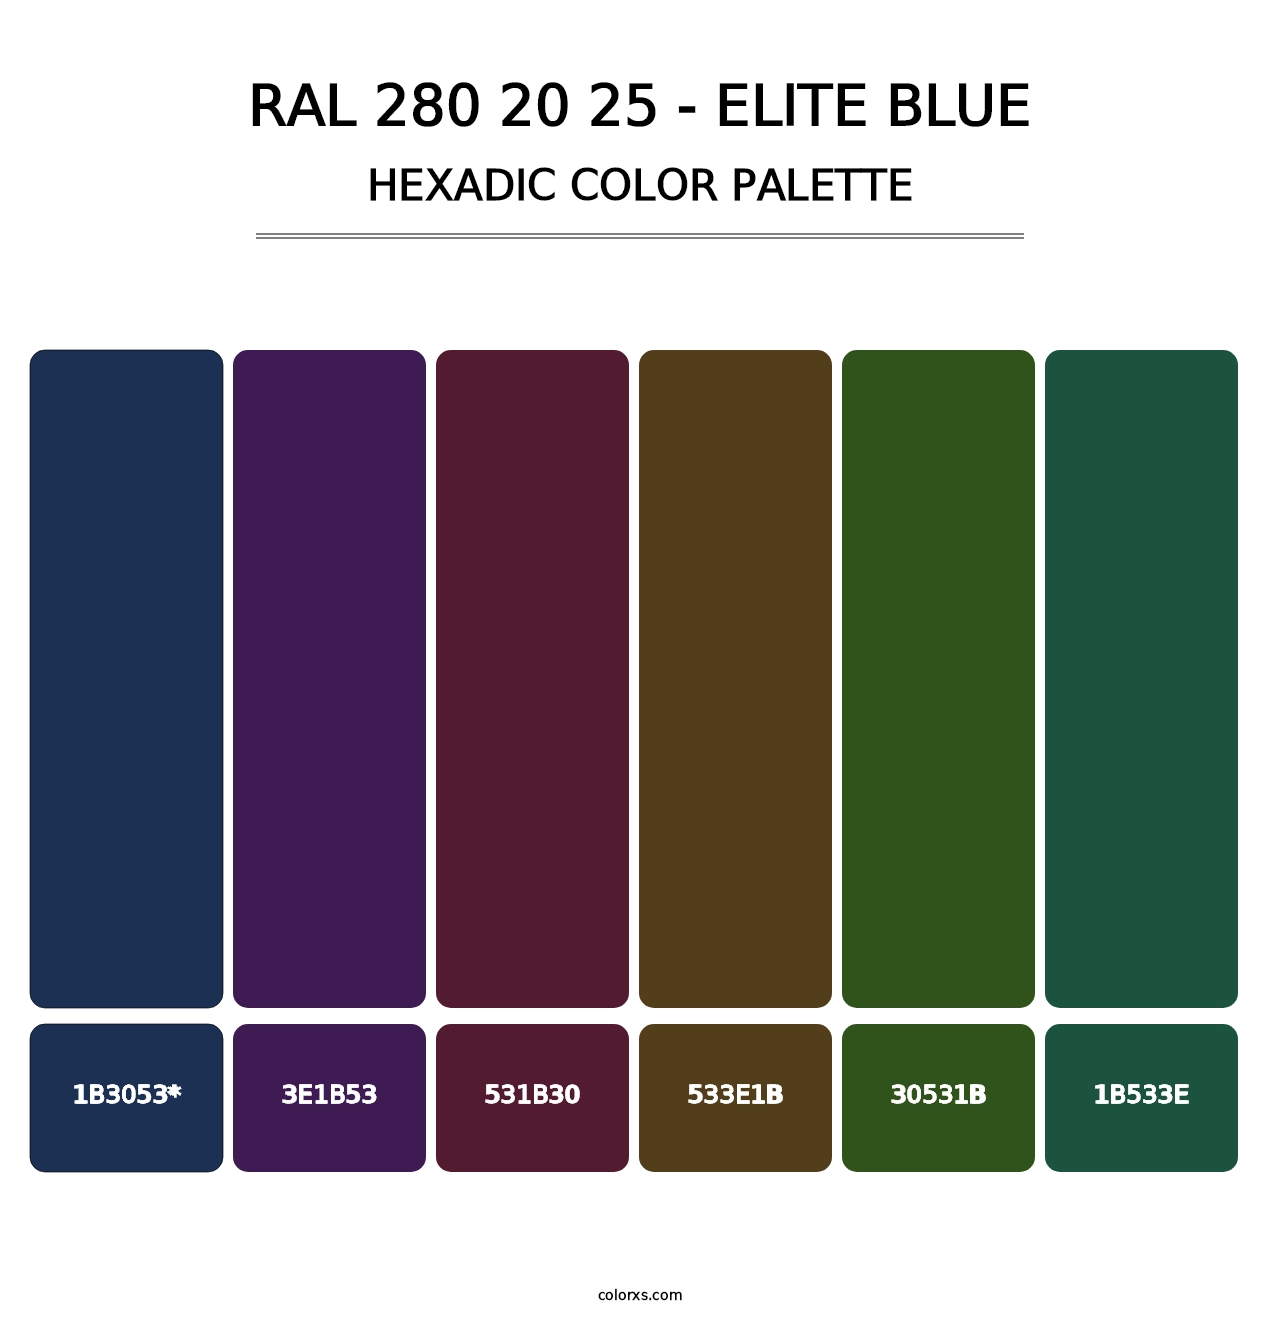 RAL 280 20 25 - Elite Blue - Hexadic Color Palette